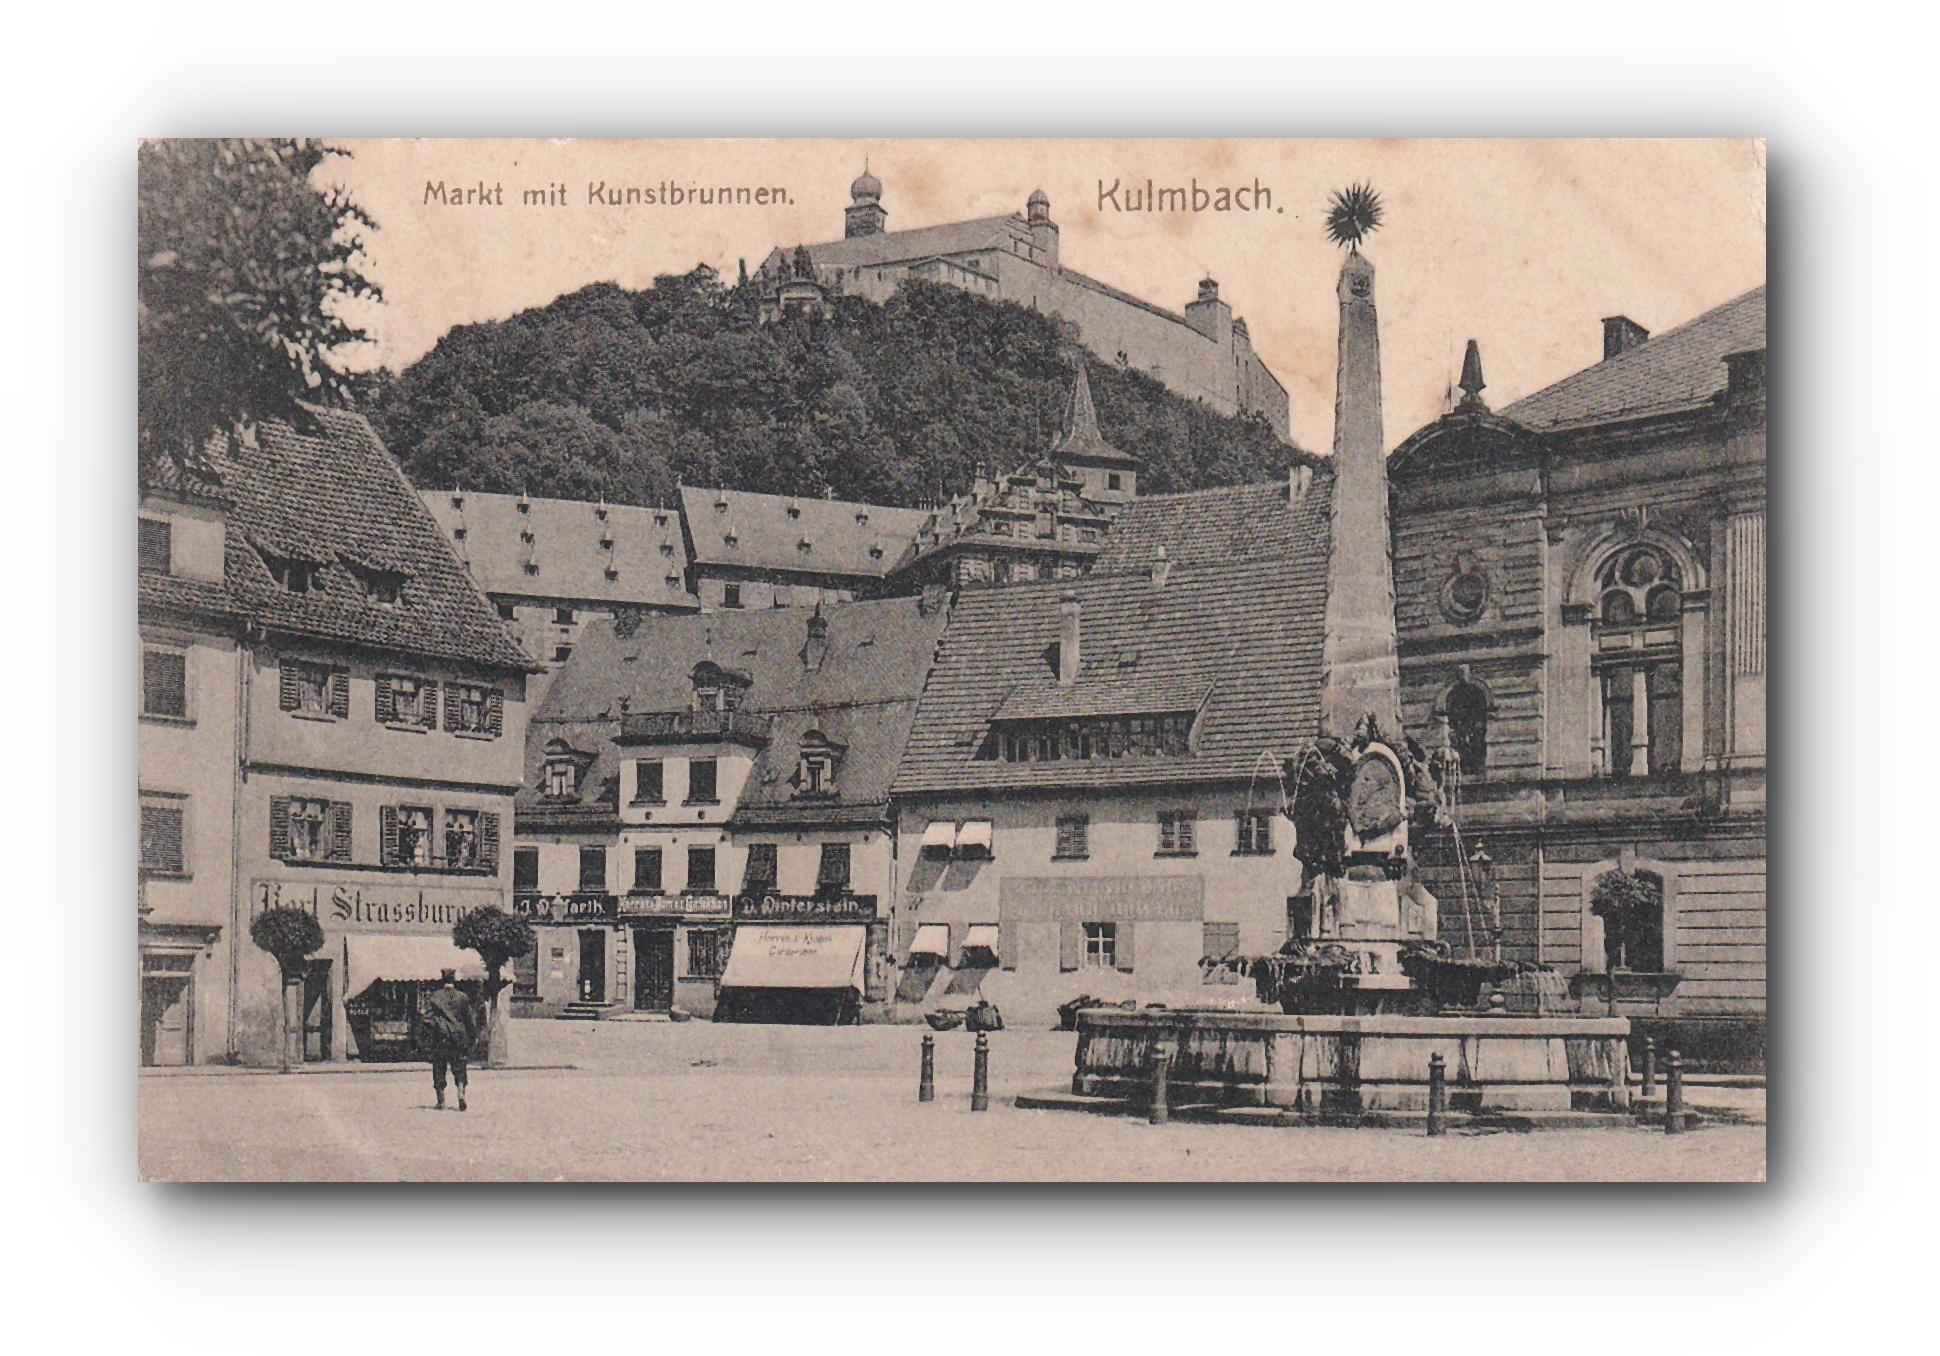 - Markt mit Kunstbrunnen - KULMBACH - 09.08.1909 -